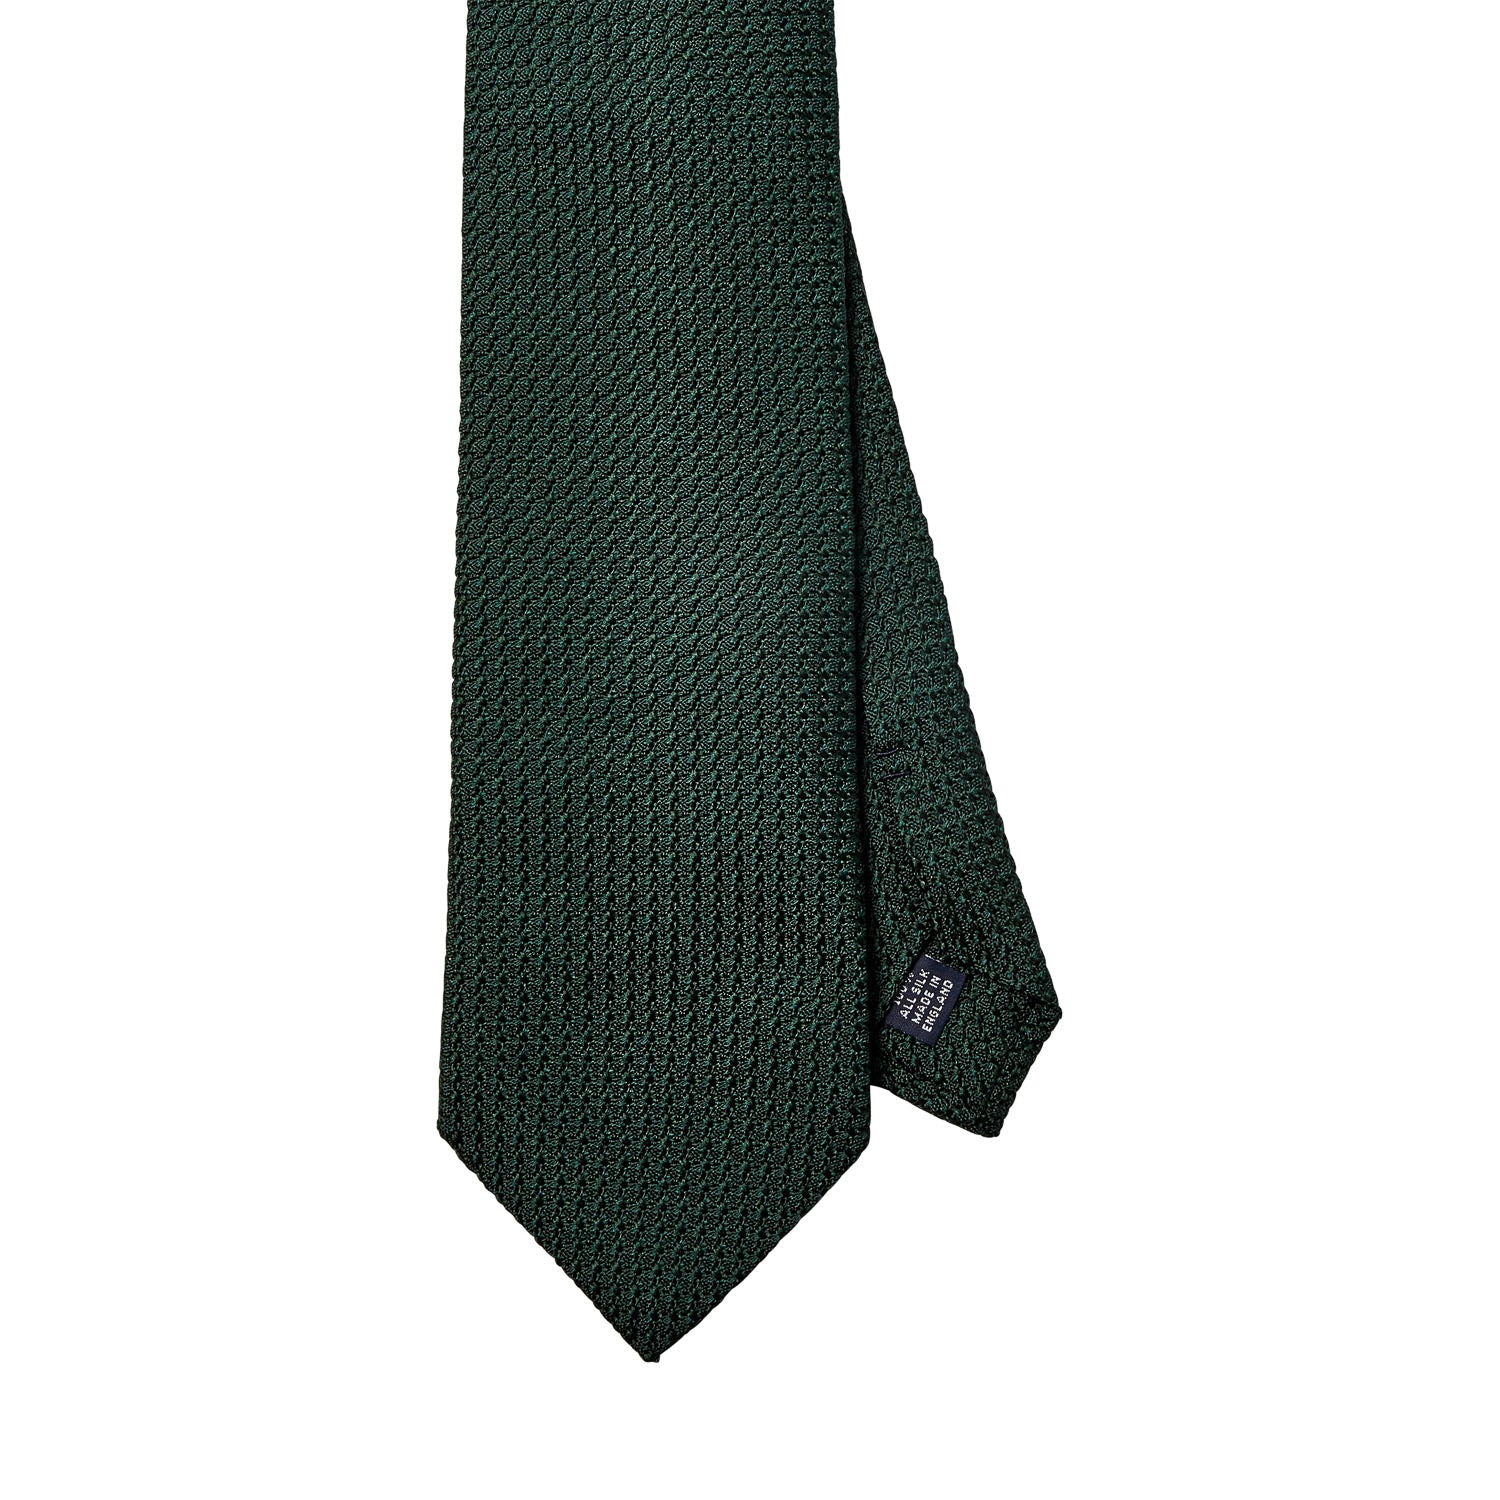 Sovereign Grade Emerald Grenadine Grossa Tie